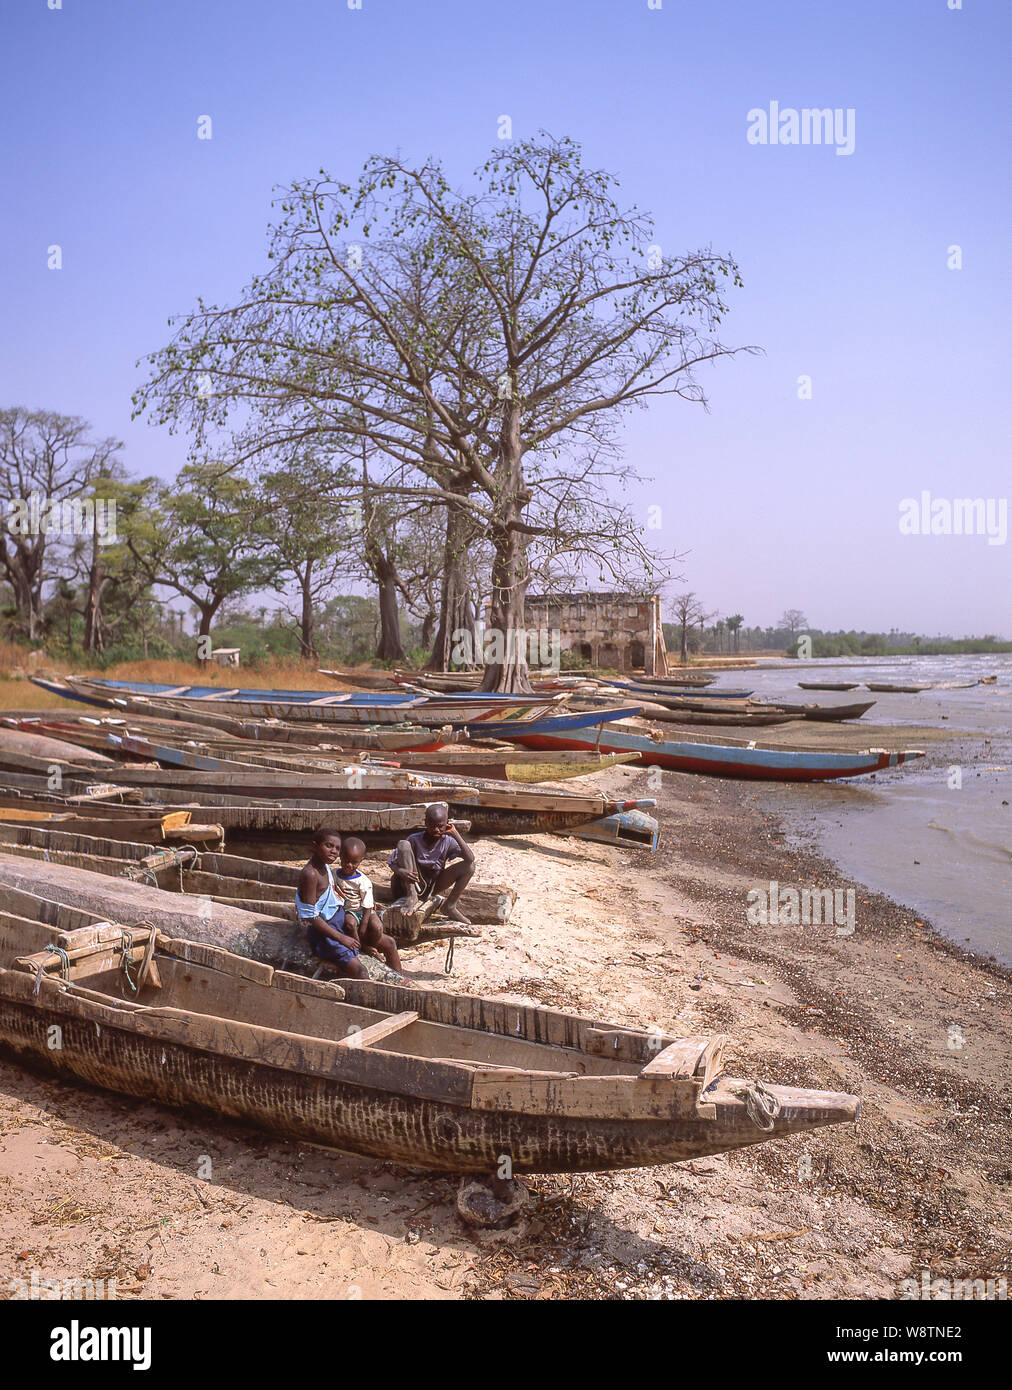 Grub-out Angeln Boote auf dem Fluss Gambia, Kunta Kinteh Insel (James Island) Trading Station, Albreda, North Bank Division, Republik Gambia Stockfoto